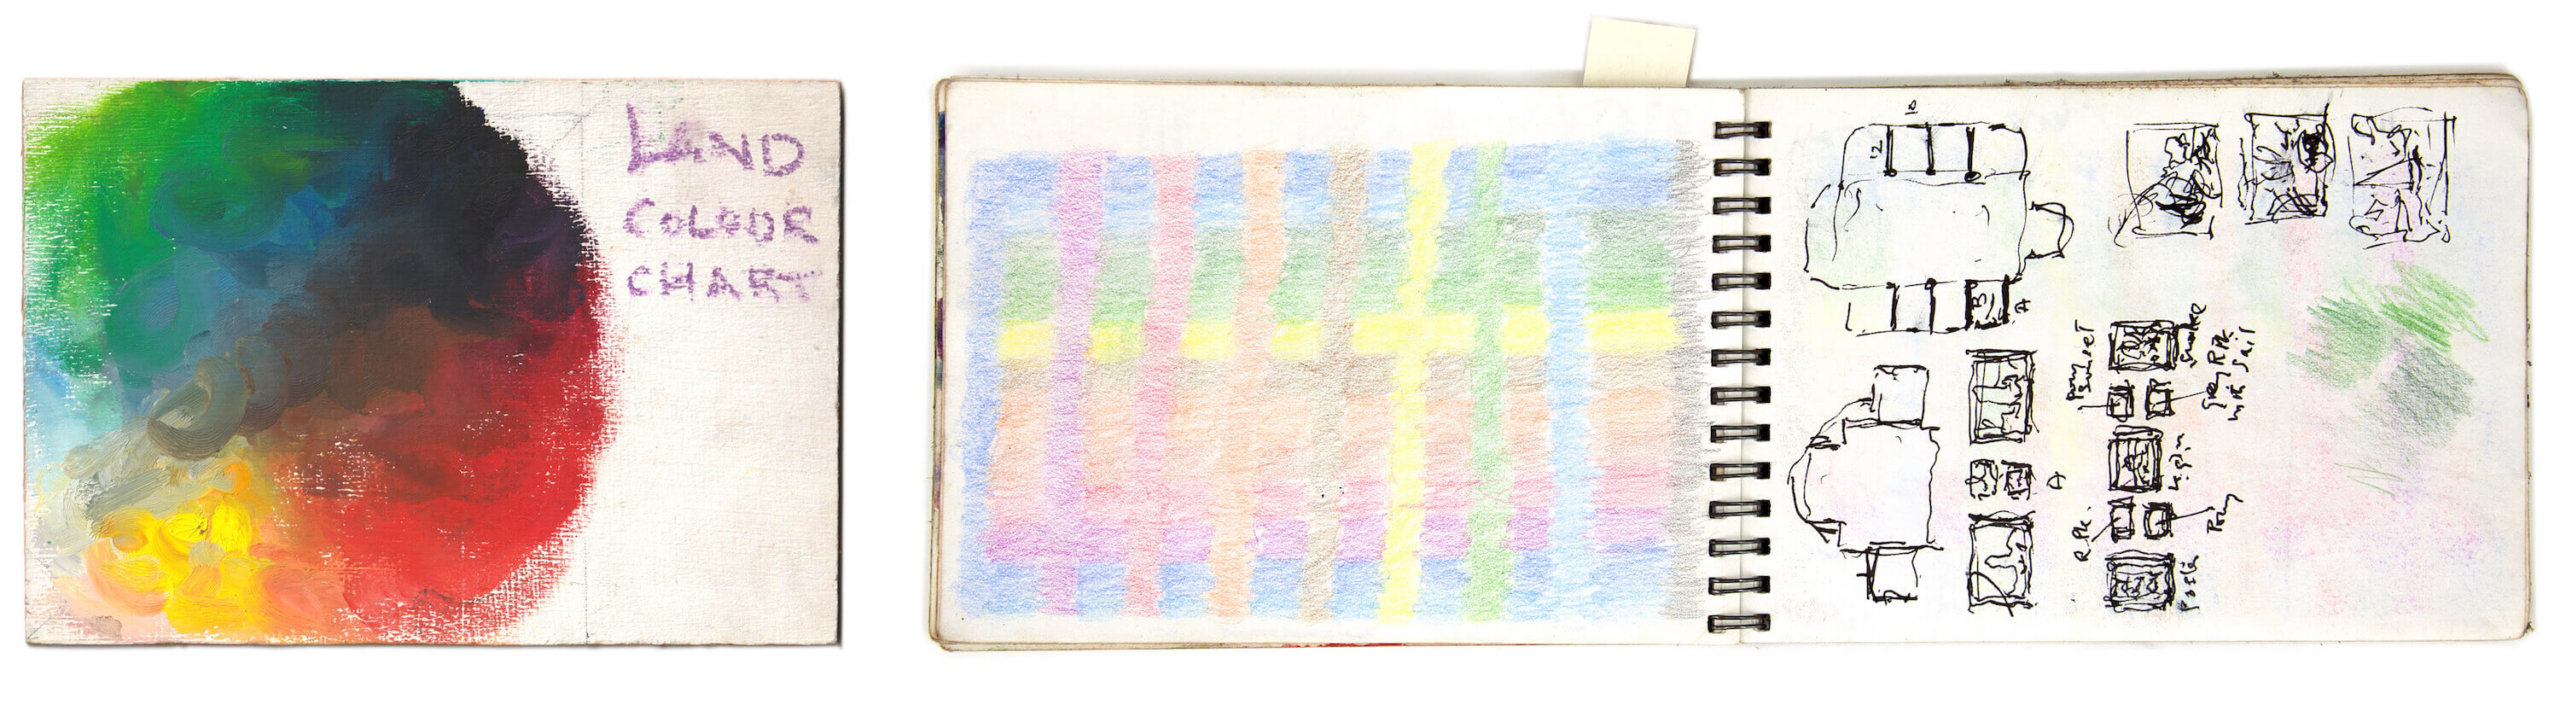 Land Colour Chart, a colour chart made by Sargy Mann based on Edwin Land’s theories (Sargy Mann estate)